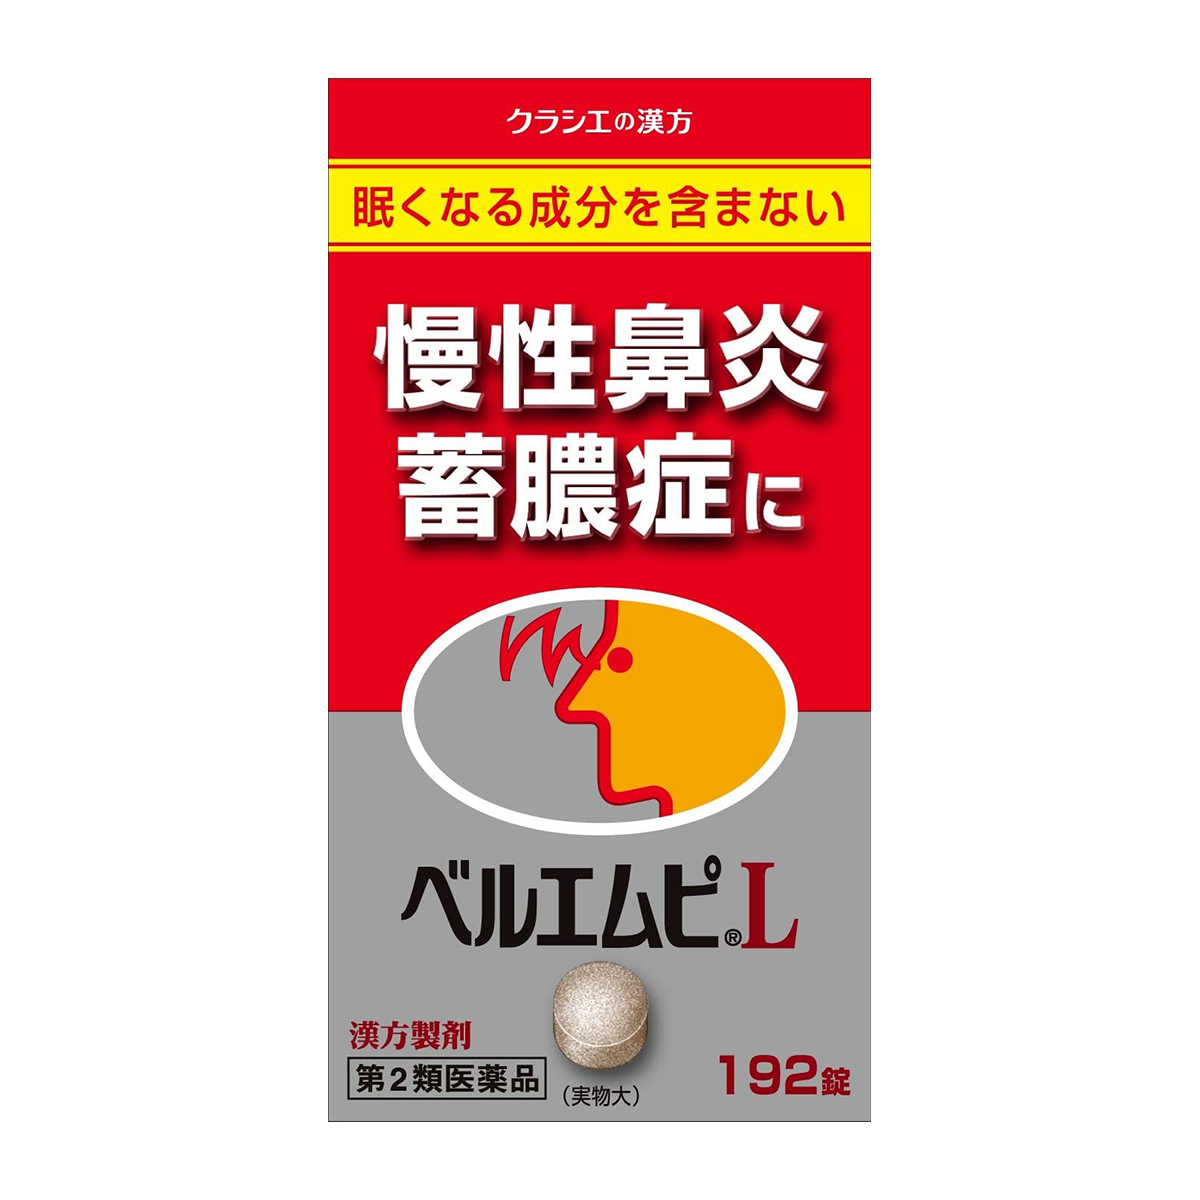 Kracie クラシエ ベルエムピL錠 192錠 漢方薬の商品画像